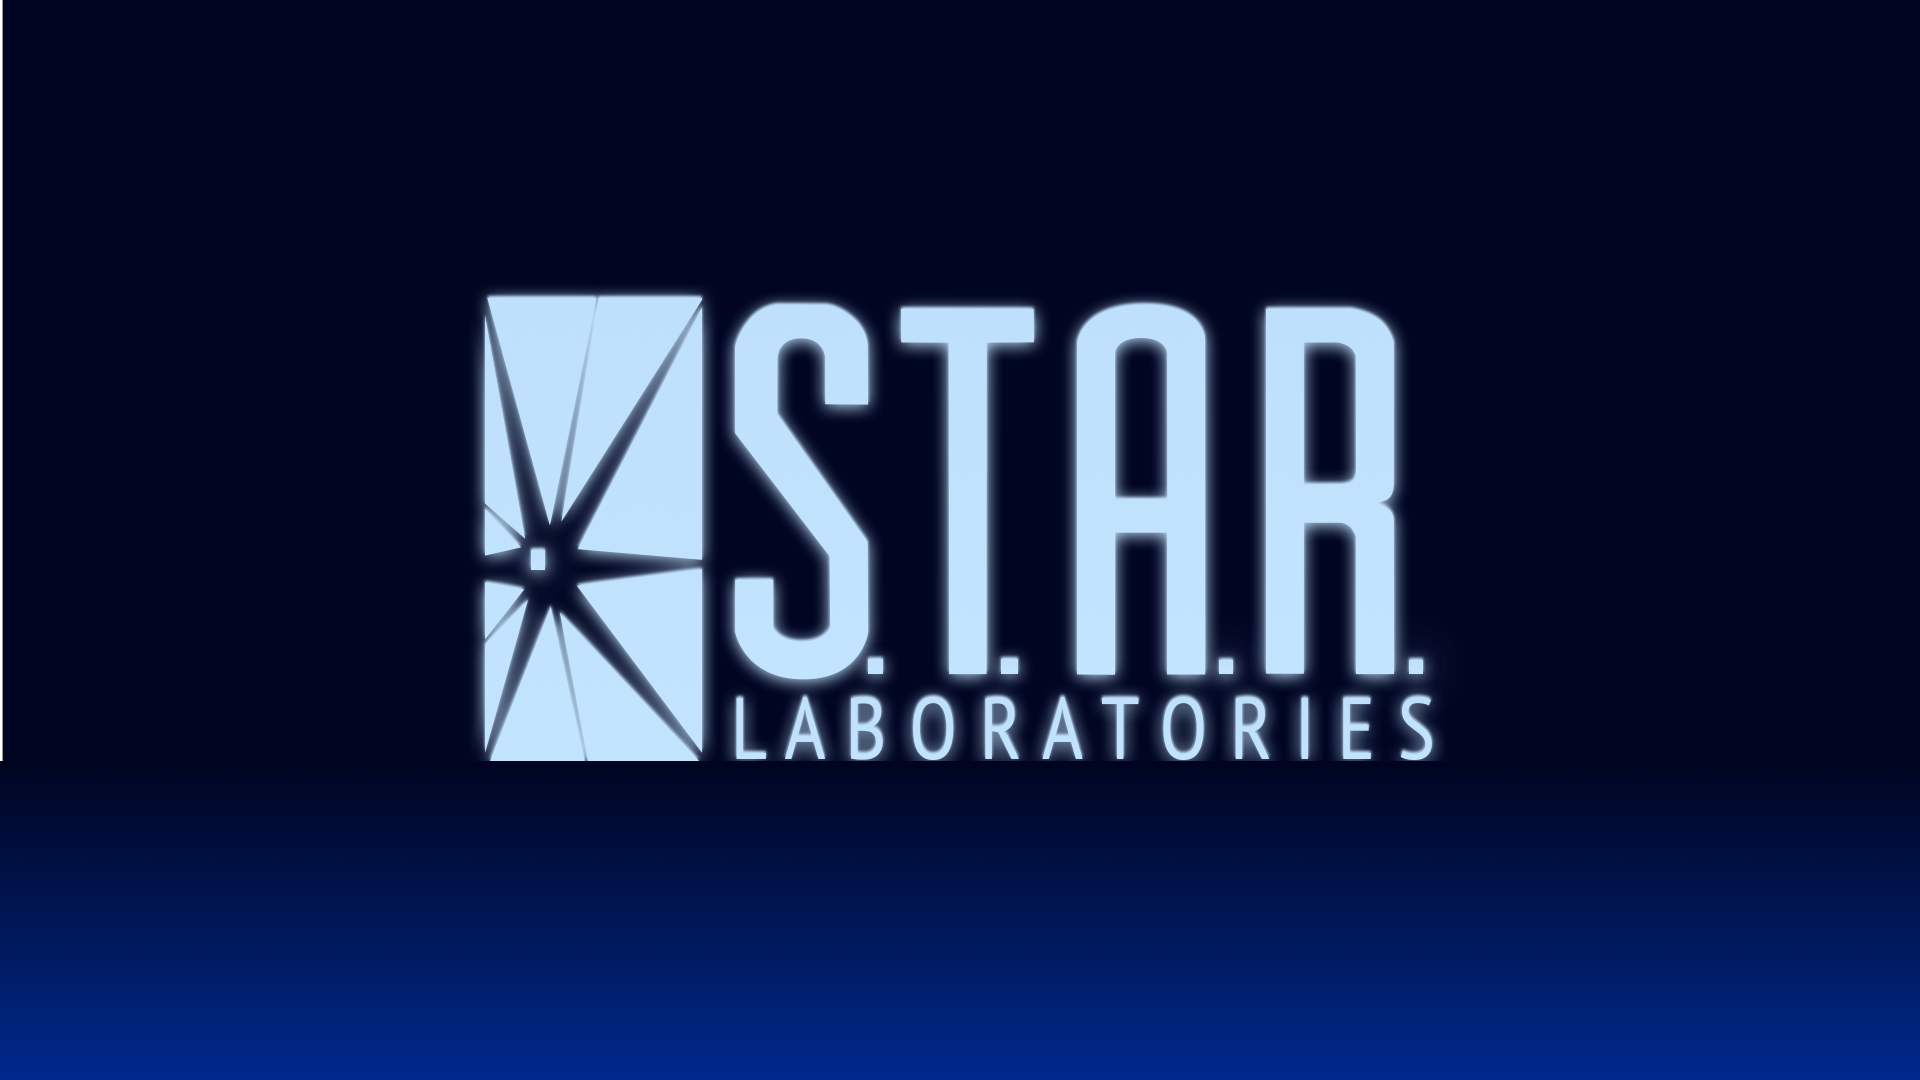 The Flash Season 3 STAR Labs Wallpaper